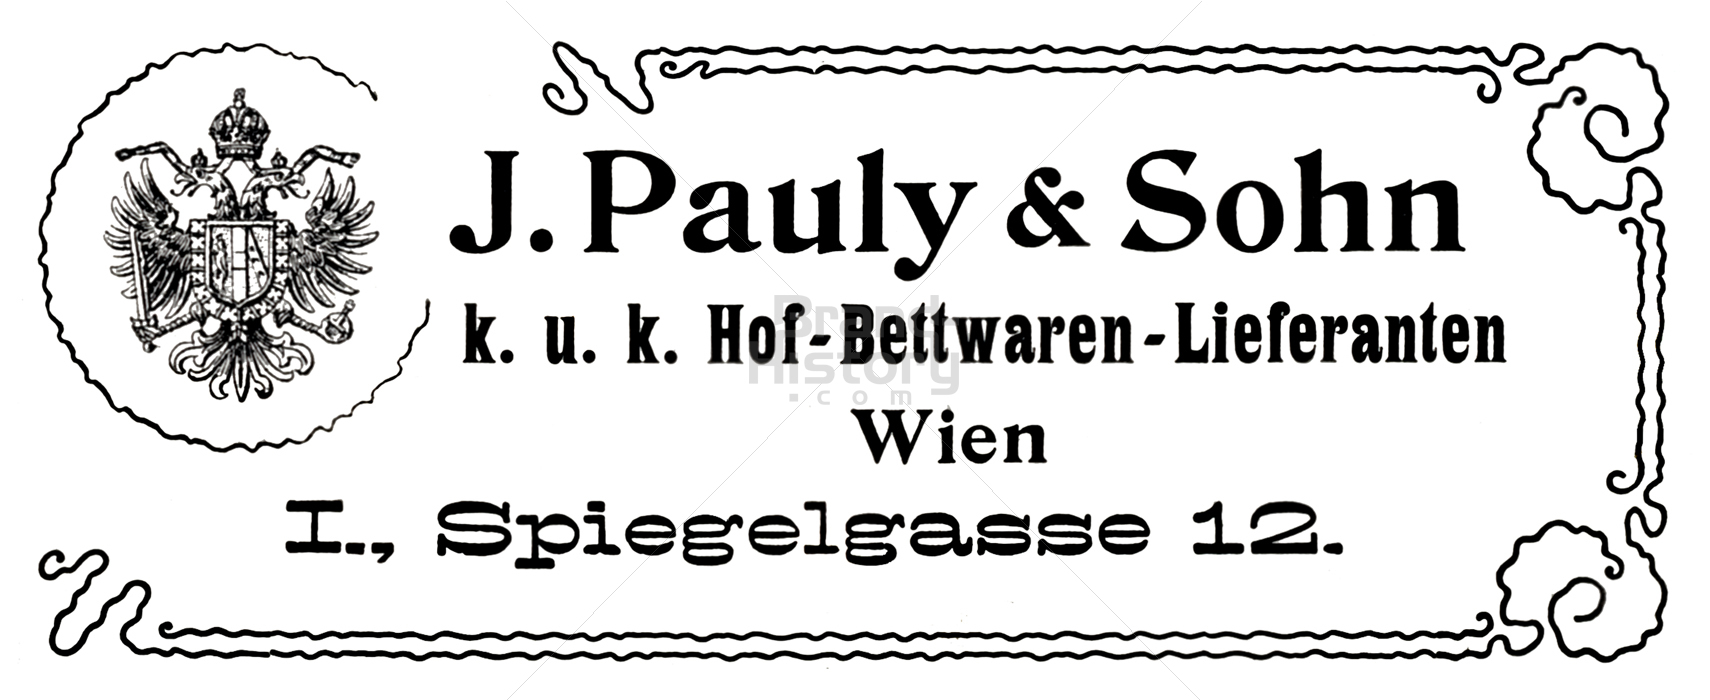 J. Pauly & Sohn, Wien